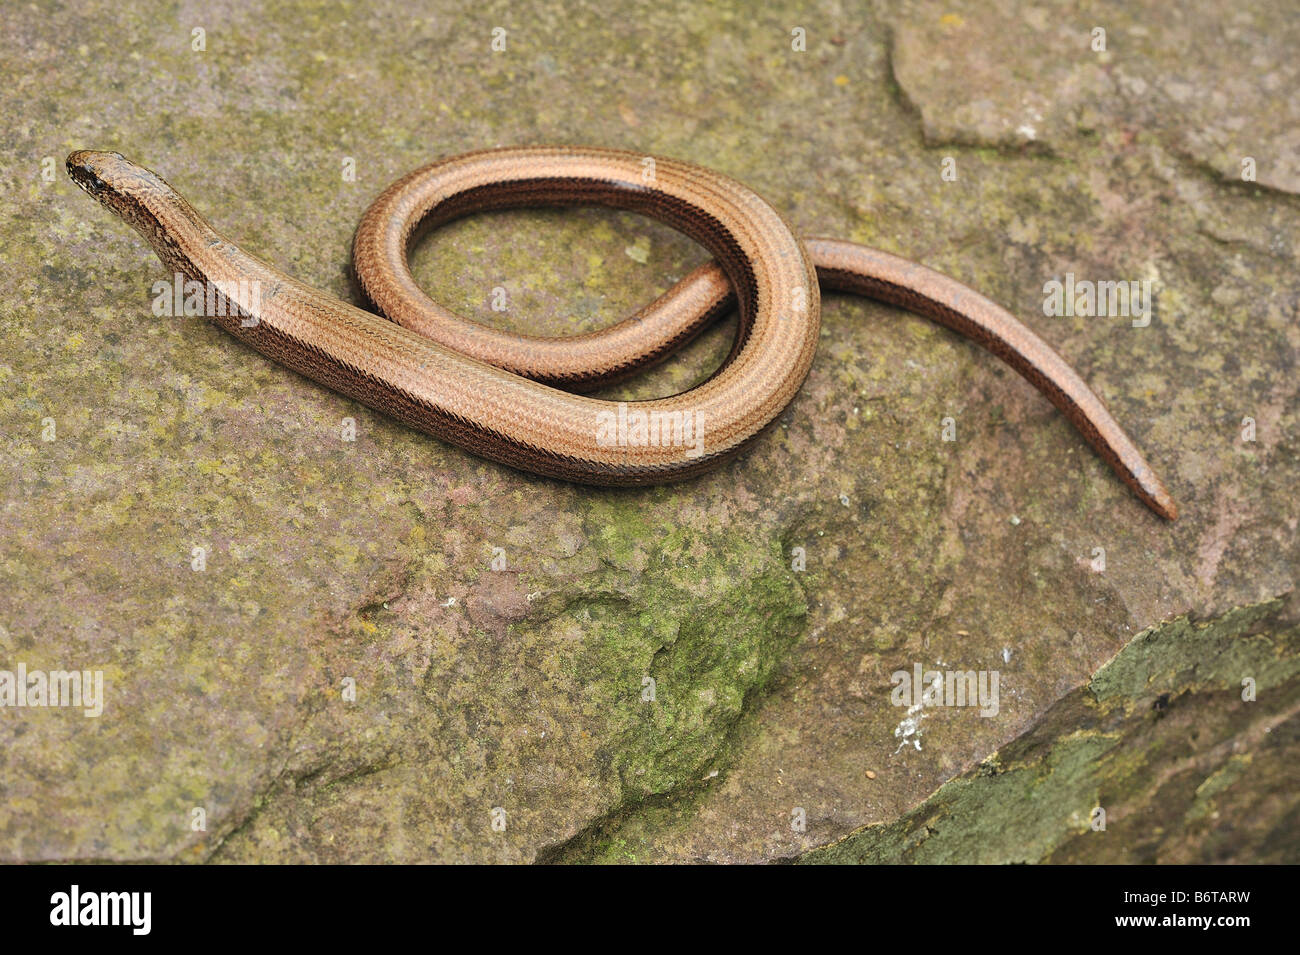 Slow worm - Anguis fragilis - basking on a rock. Stock Photo